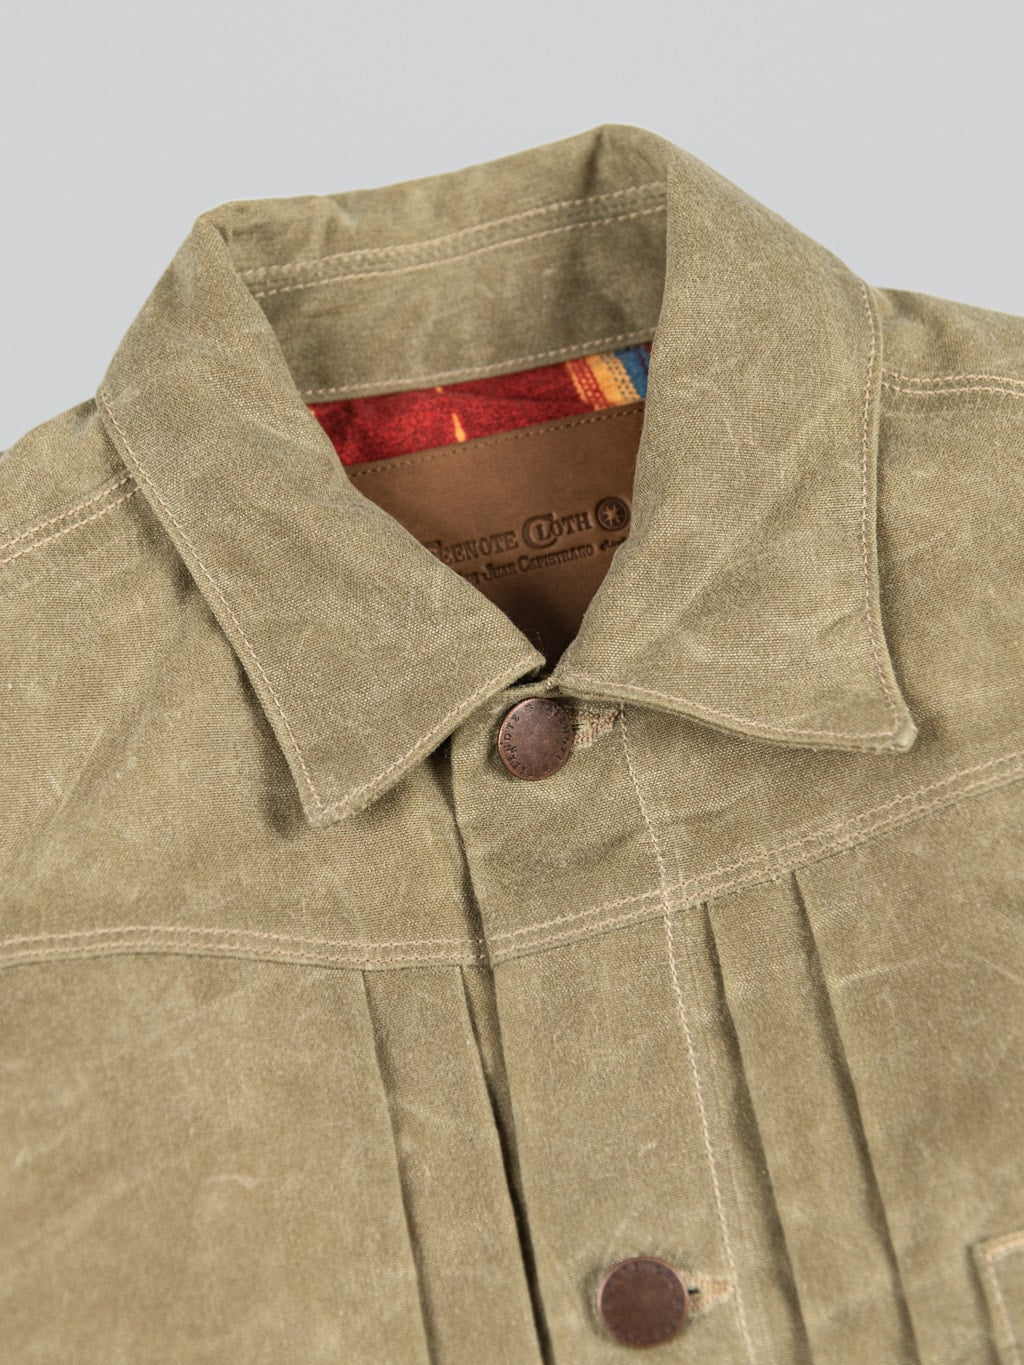 Freenote Cloth Riders Jacket Waxed Canvas Tobacco collar metal button